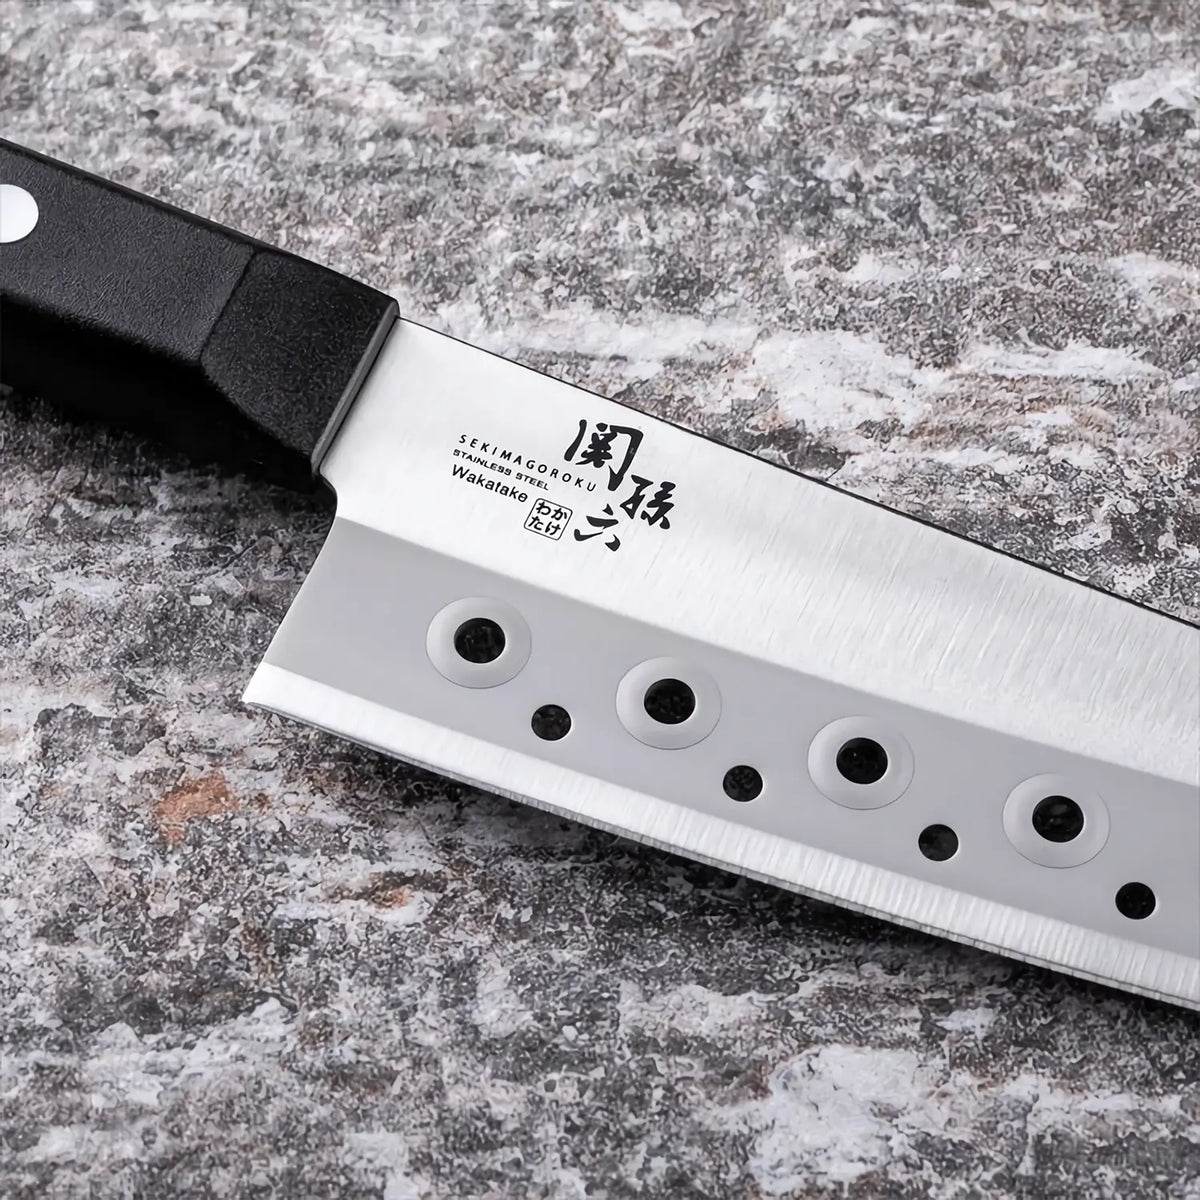 Seki Magoroku Wakatake Stainless Steel Perforated Santoku Knife